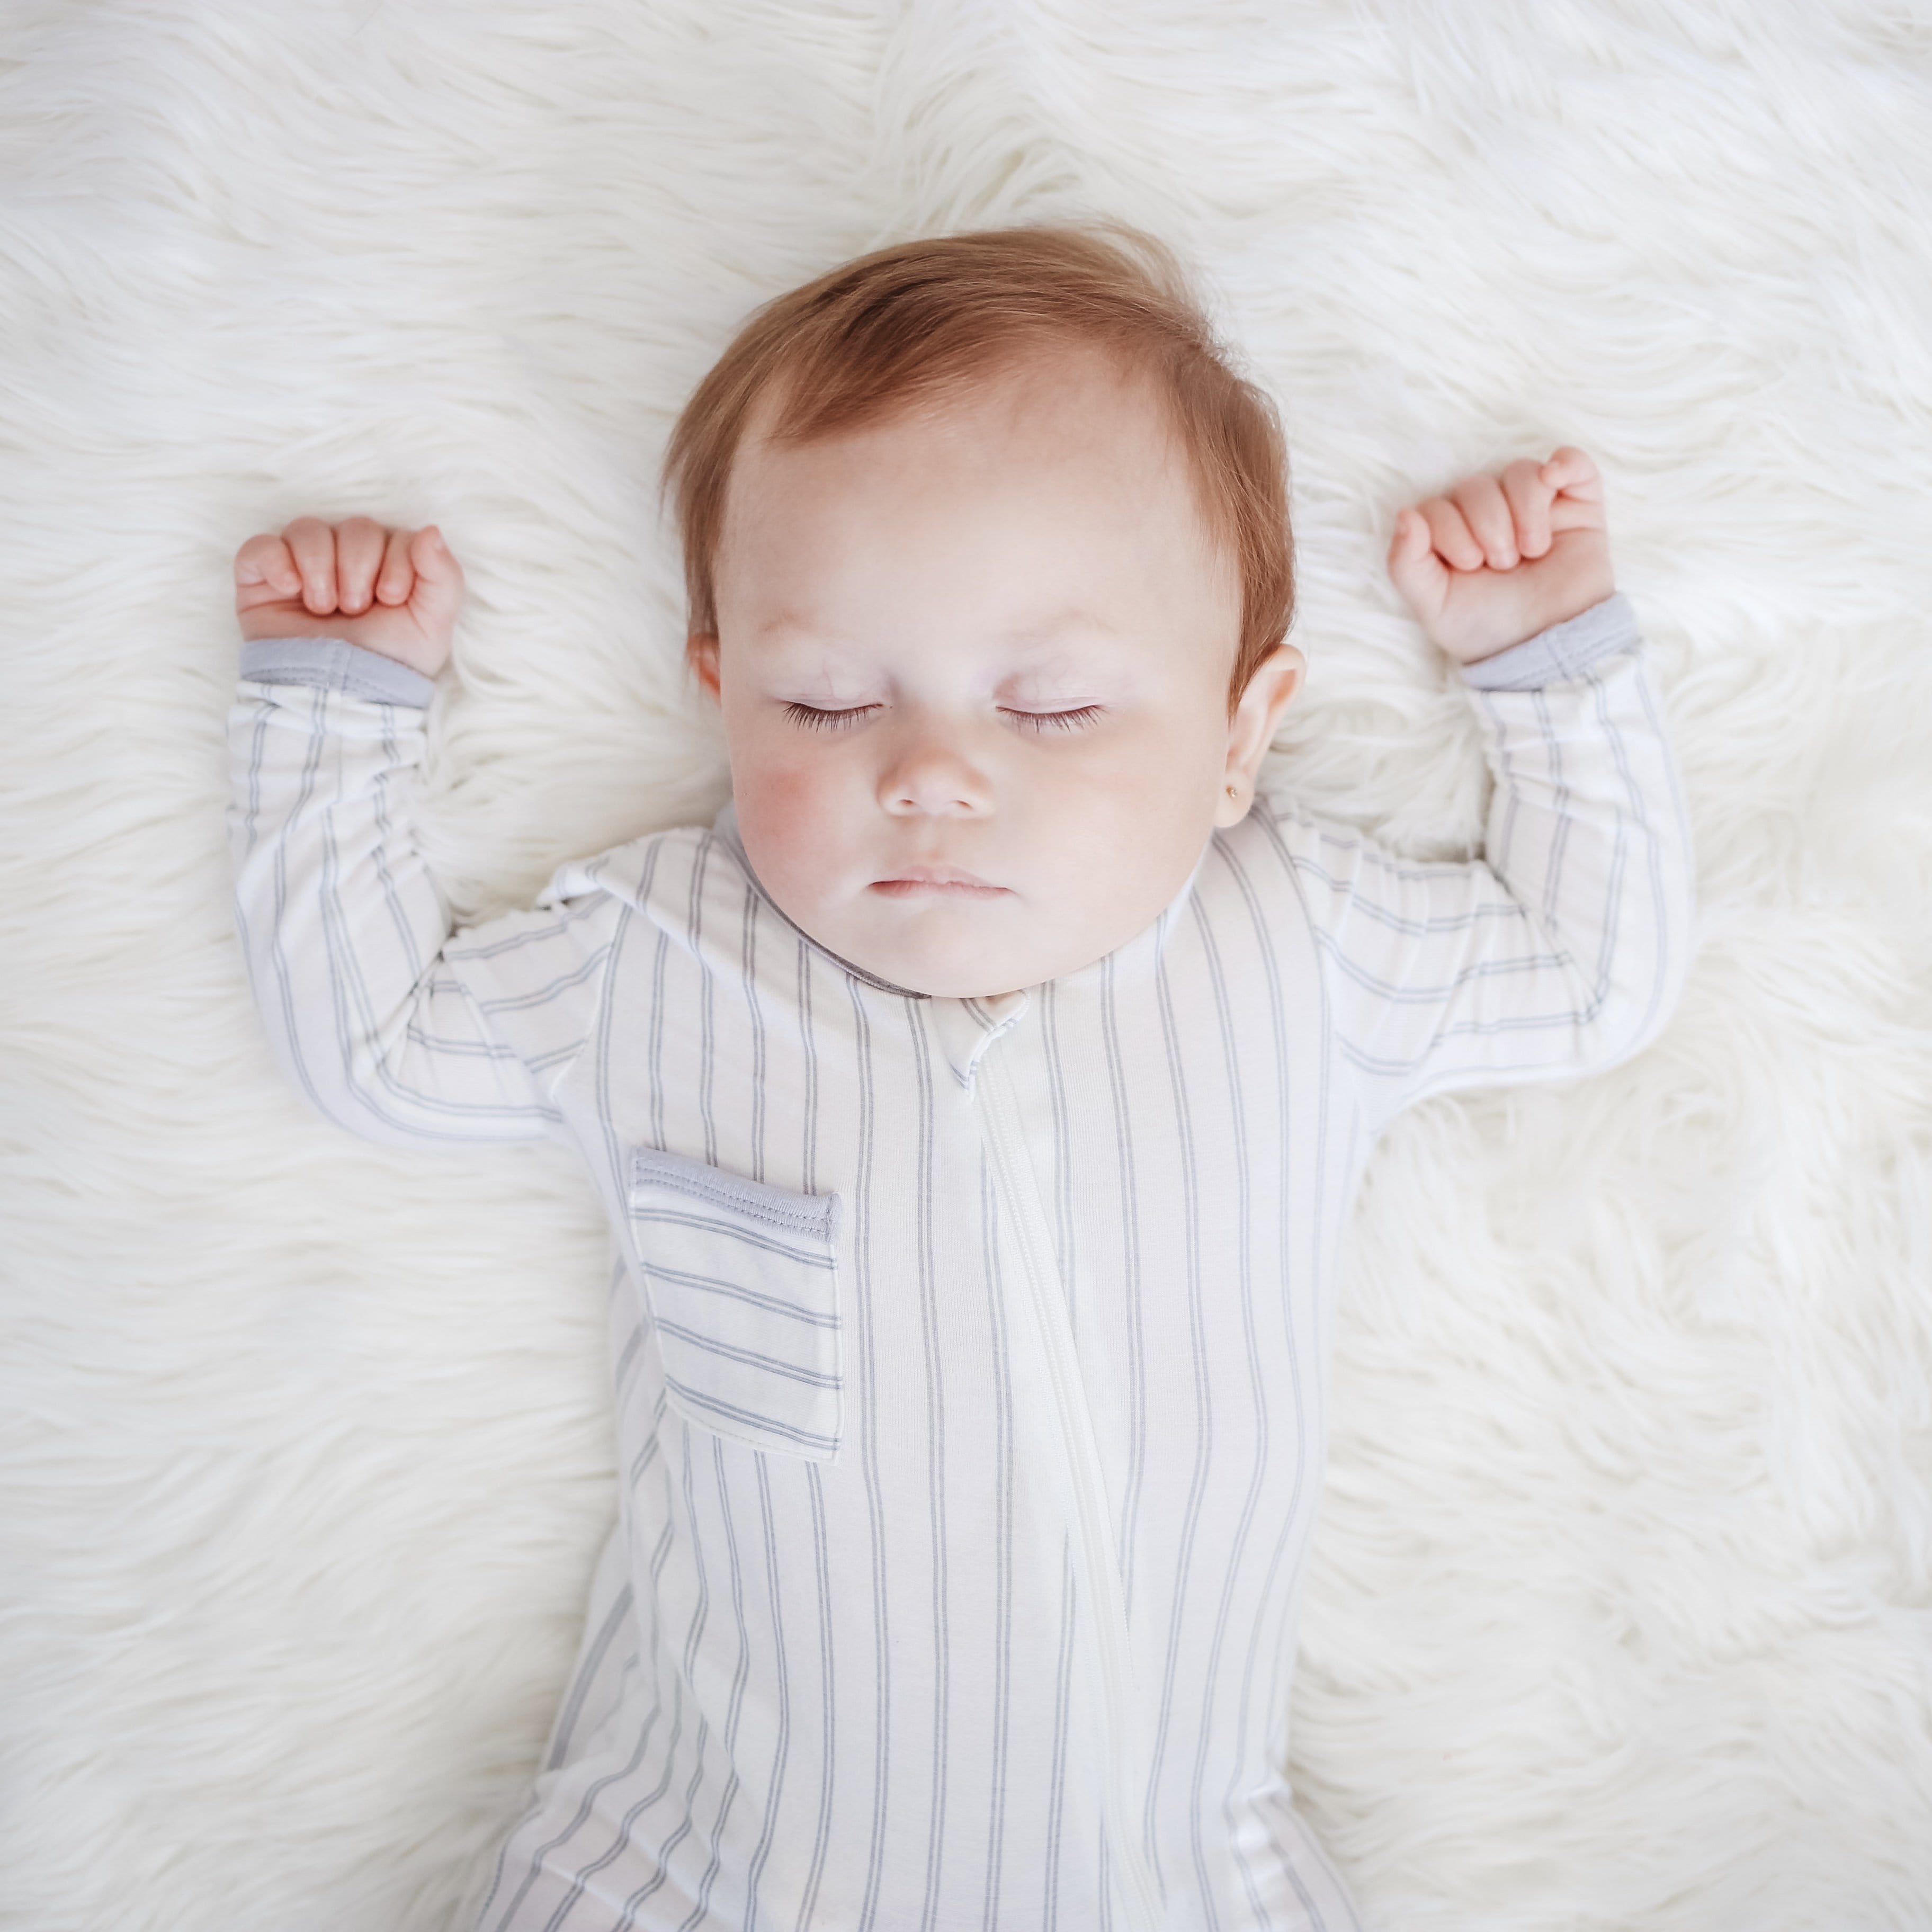 When Do Babies Start Sleeping Through the Night?